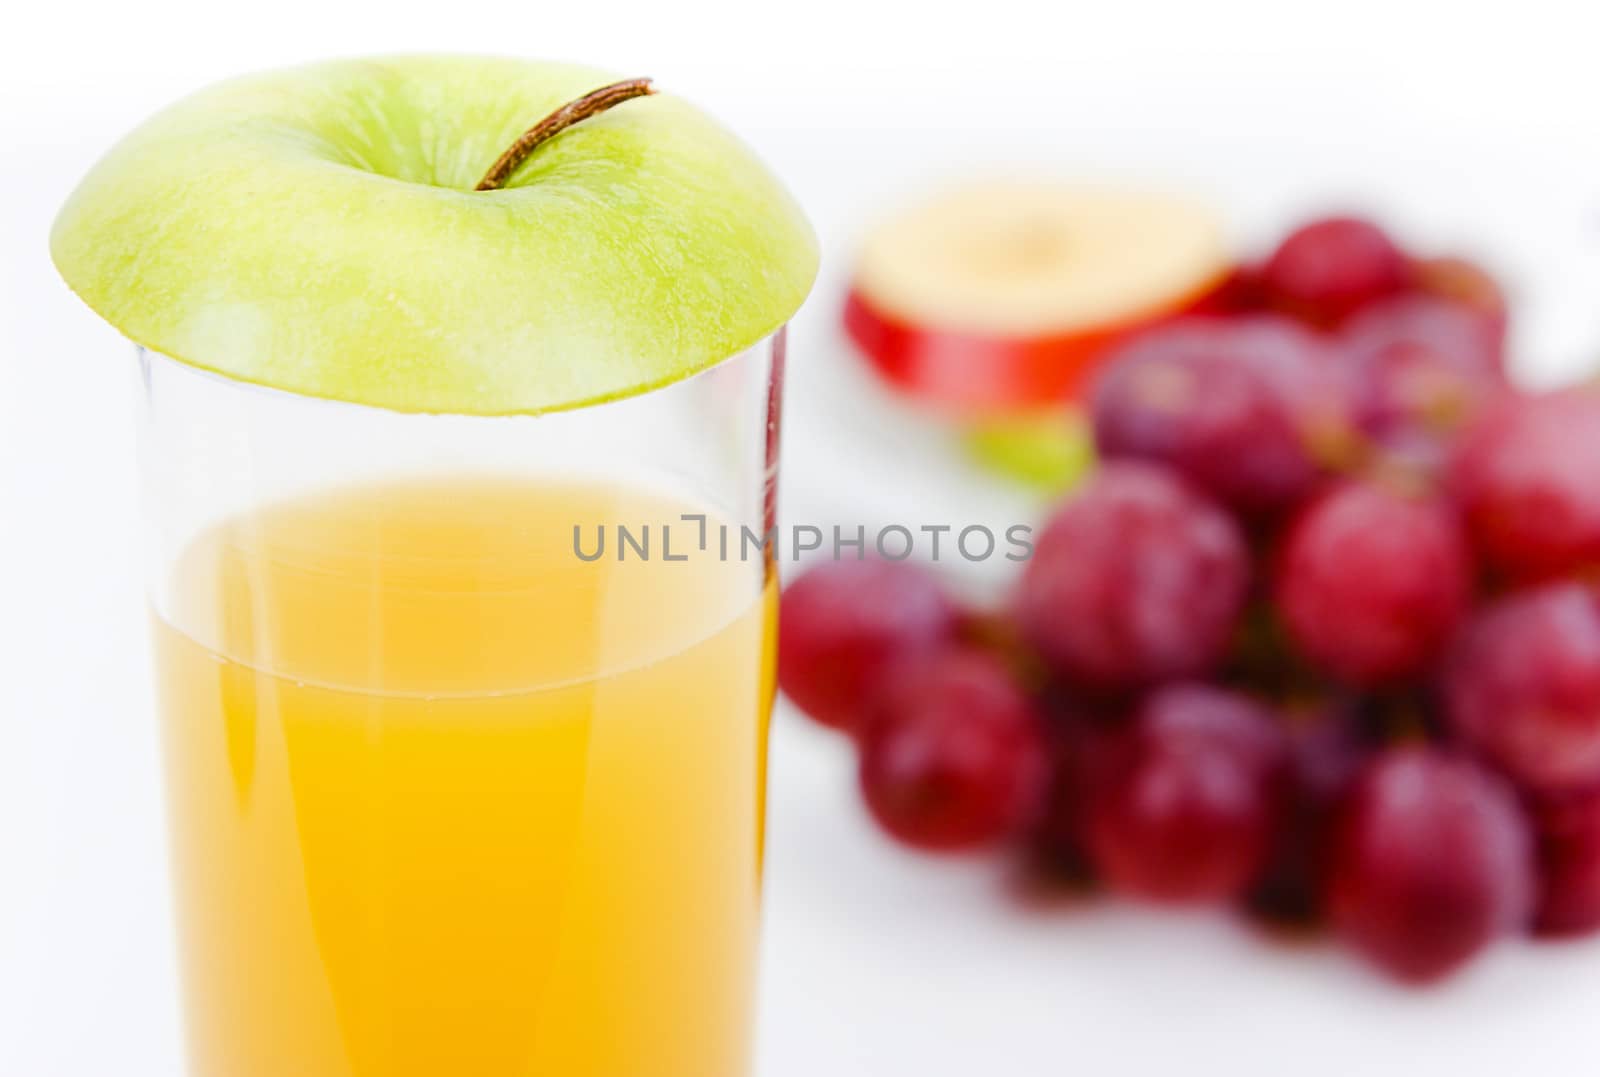 grapes, apples and orange juice. vegetarian appetizer